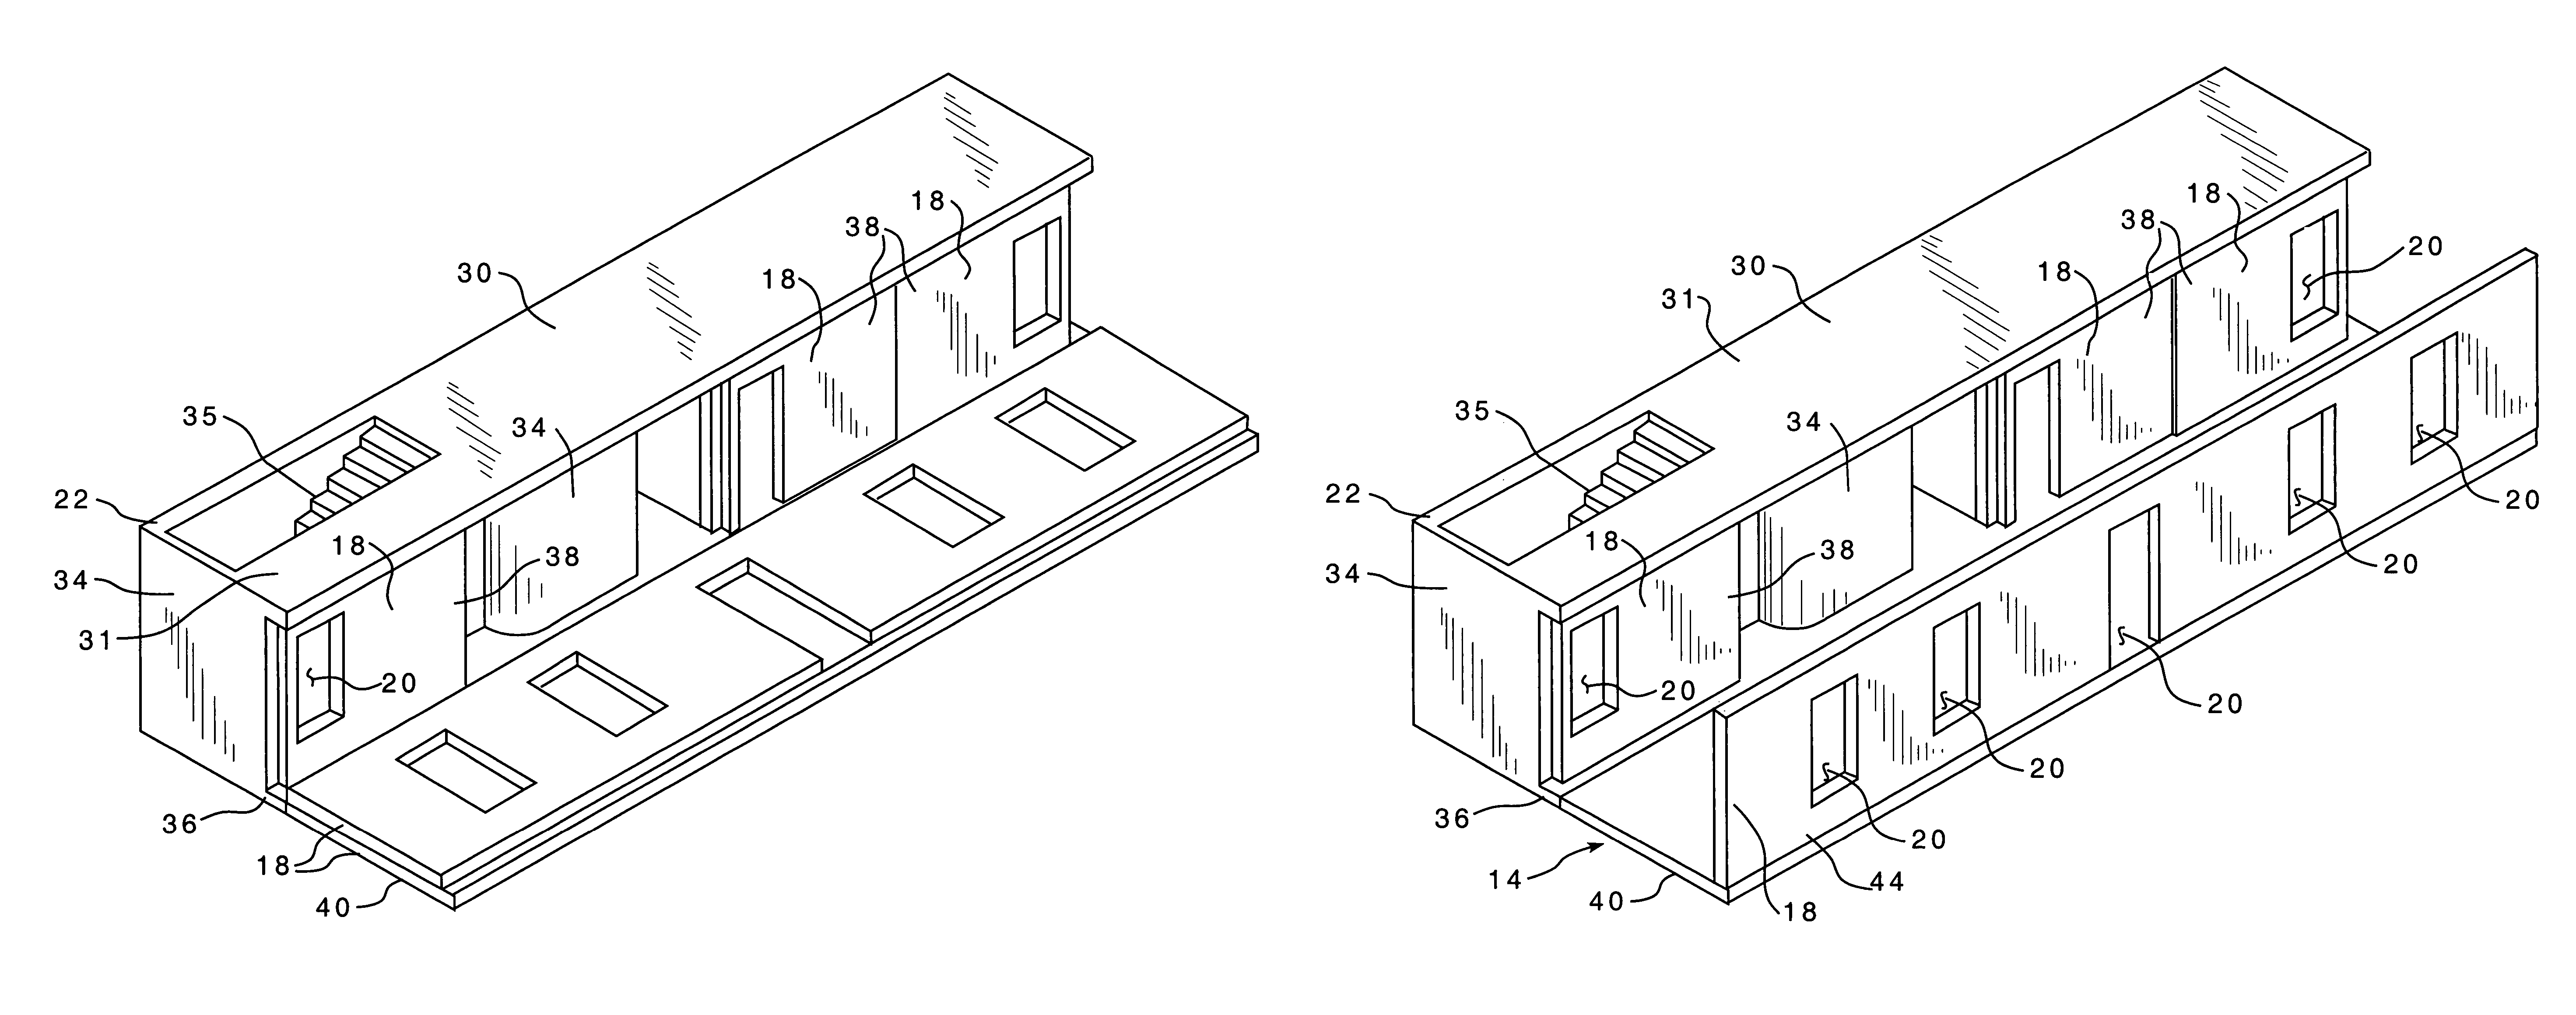 Modular prefabricated house